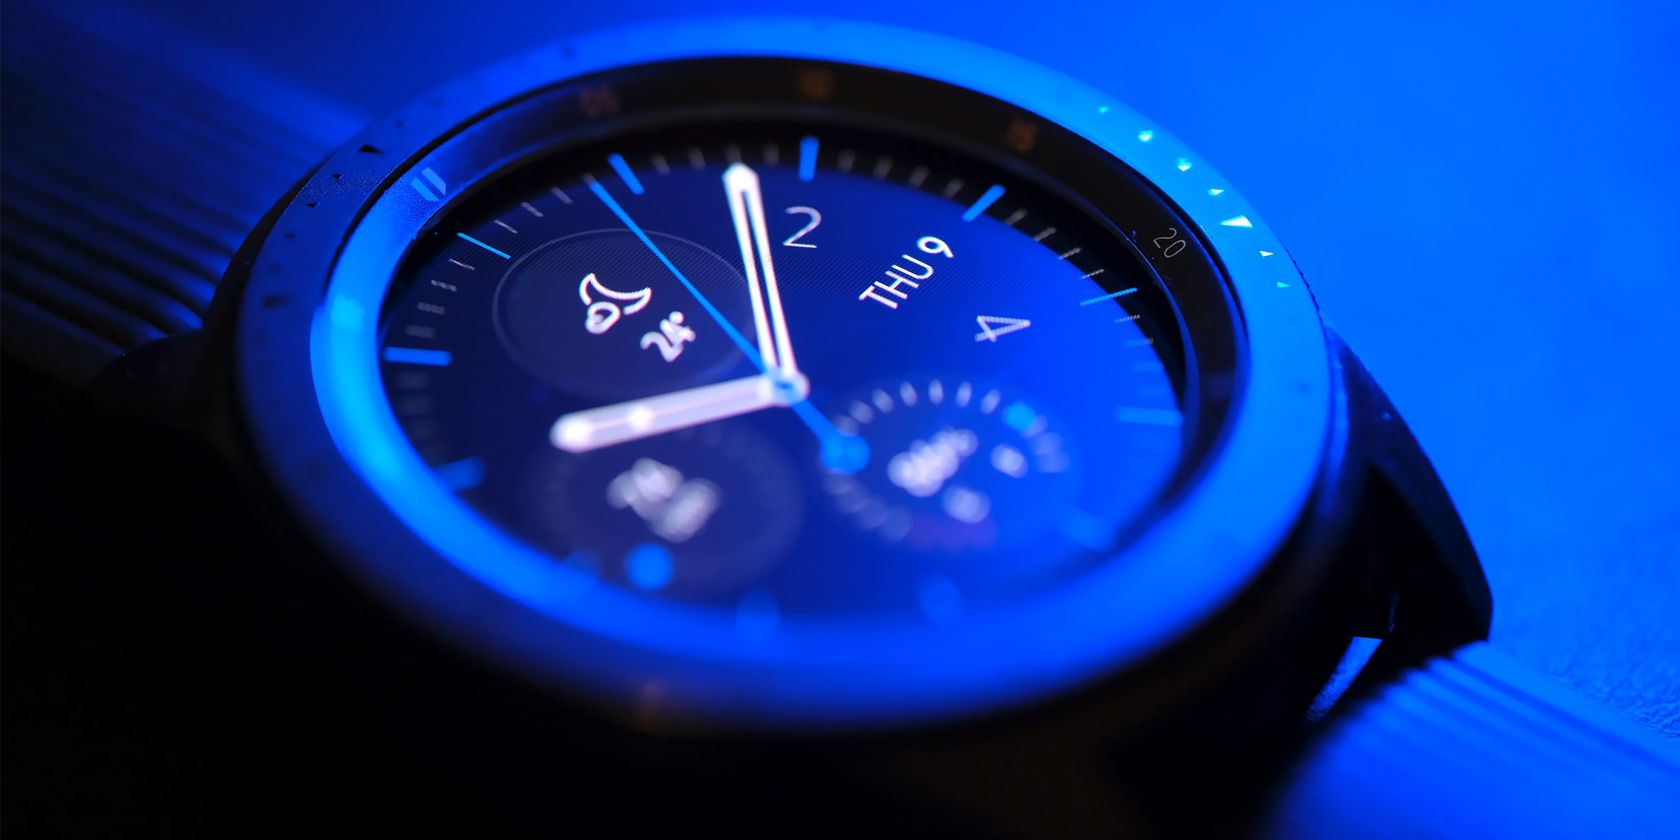 A close up image of a hybrid smartwatch